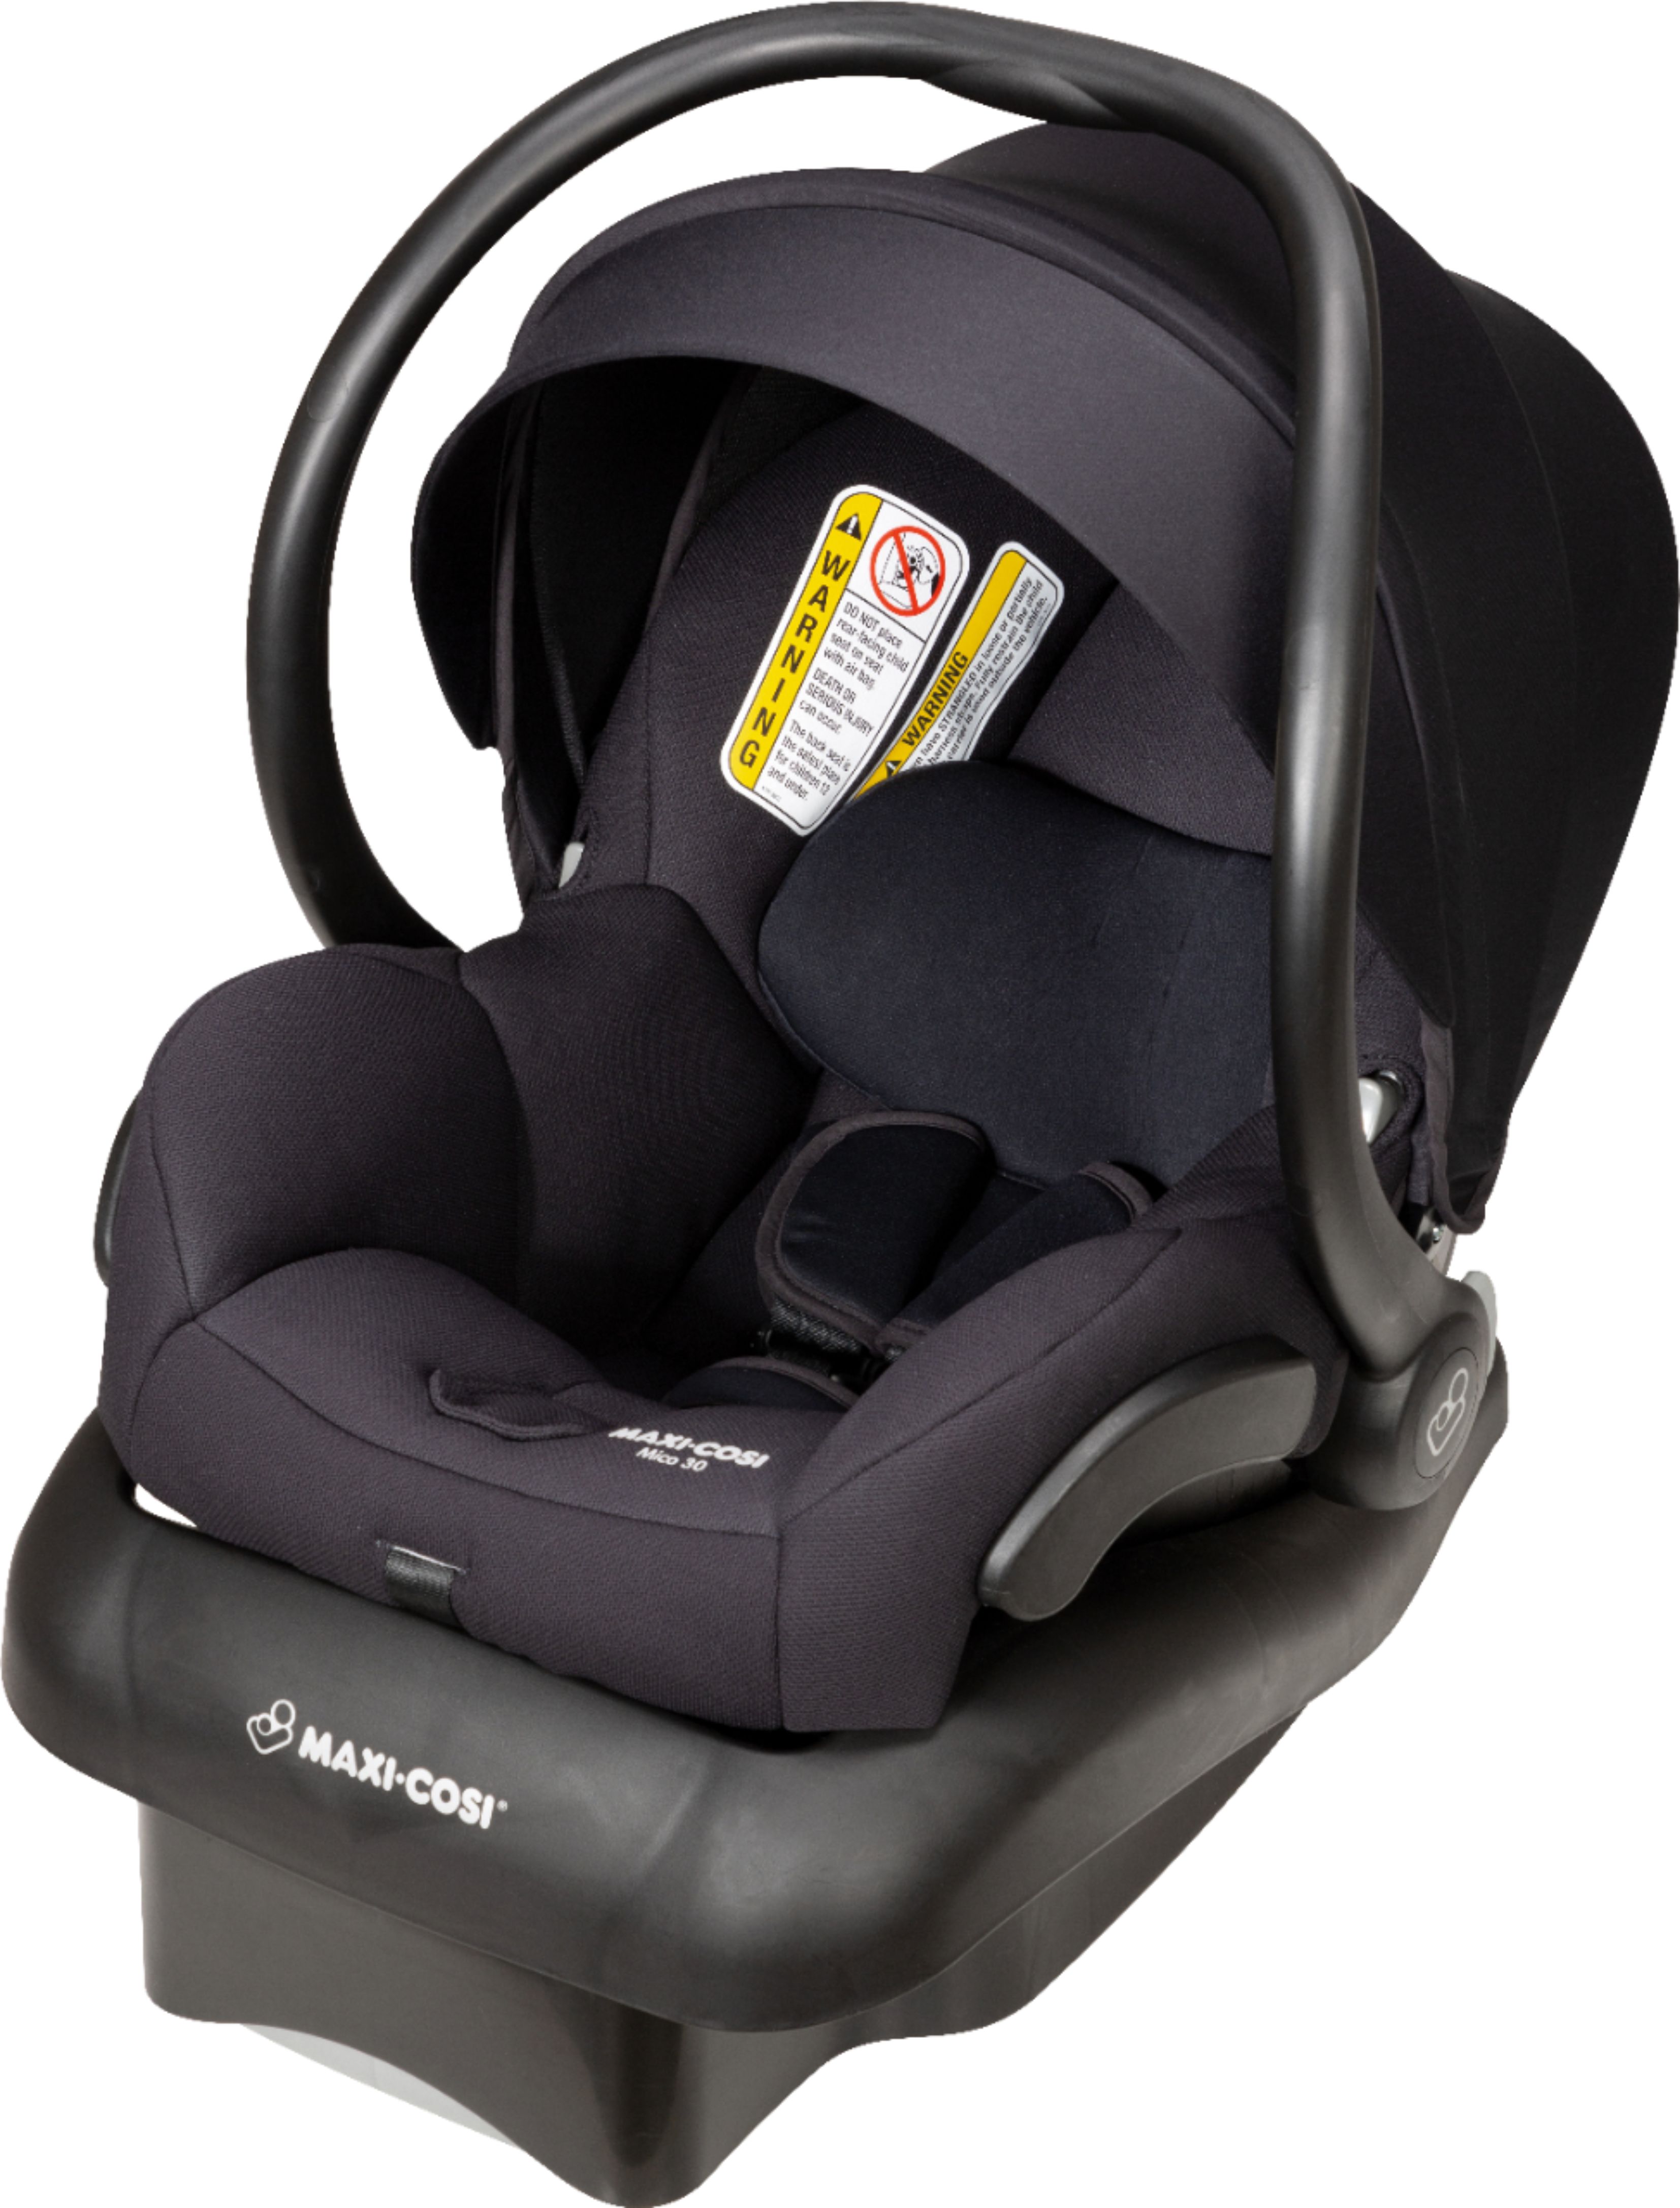 textuur verder informatie Maxi-Cosi Mico 30 Infant Car Seat Black IC301EMJA - Best Buy